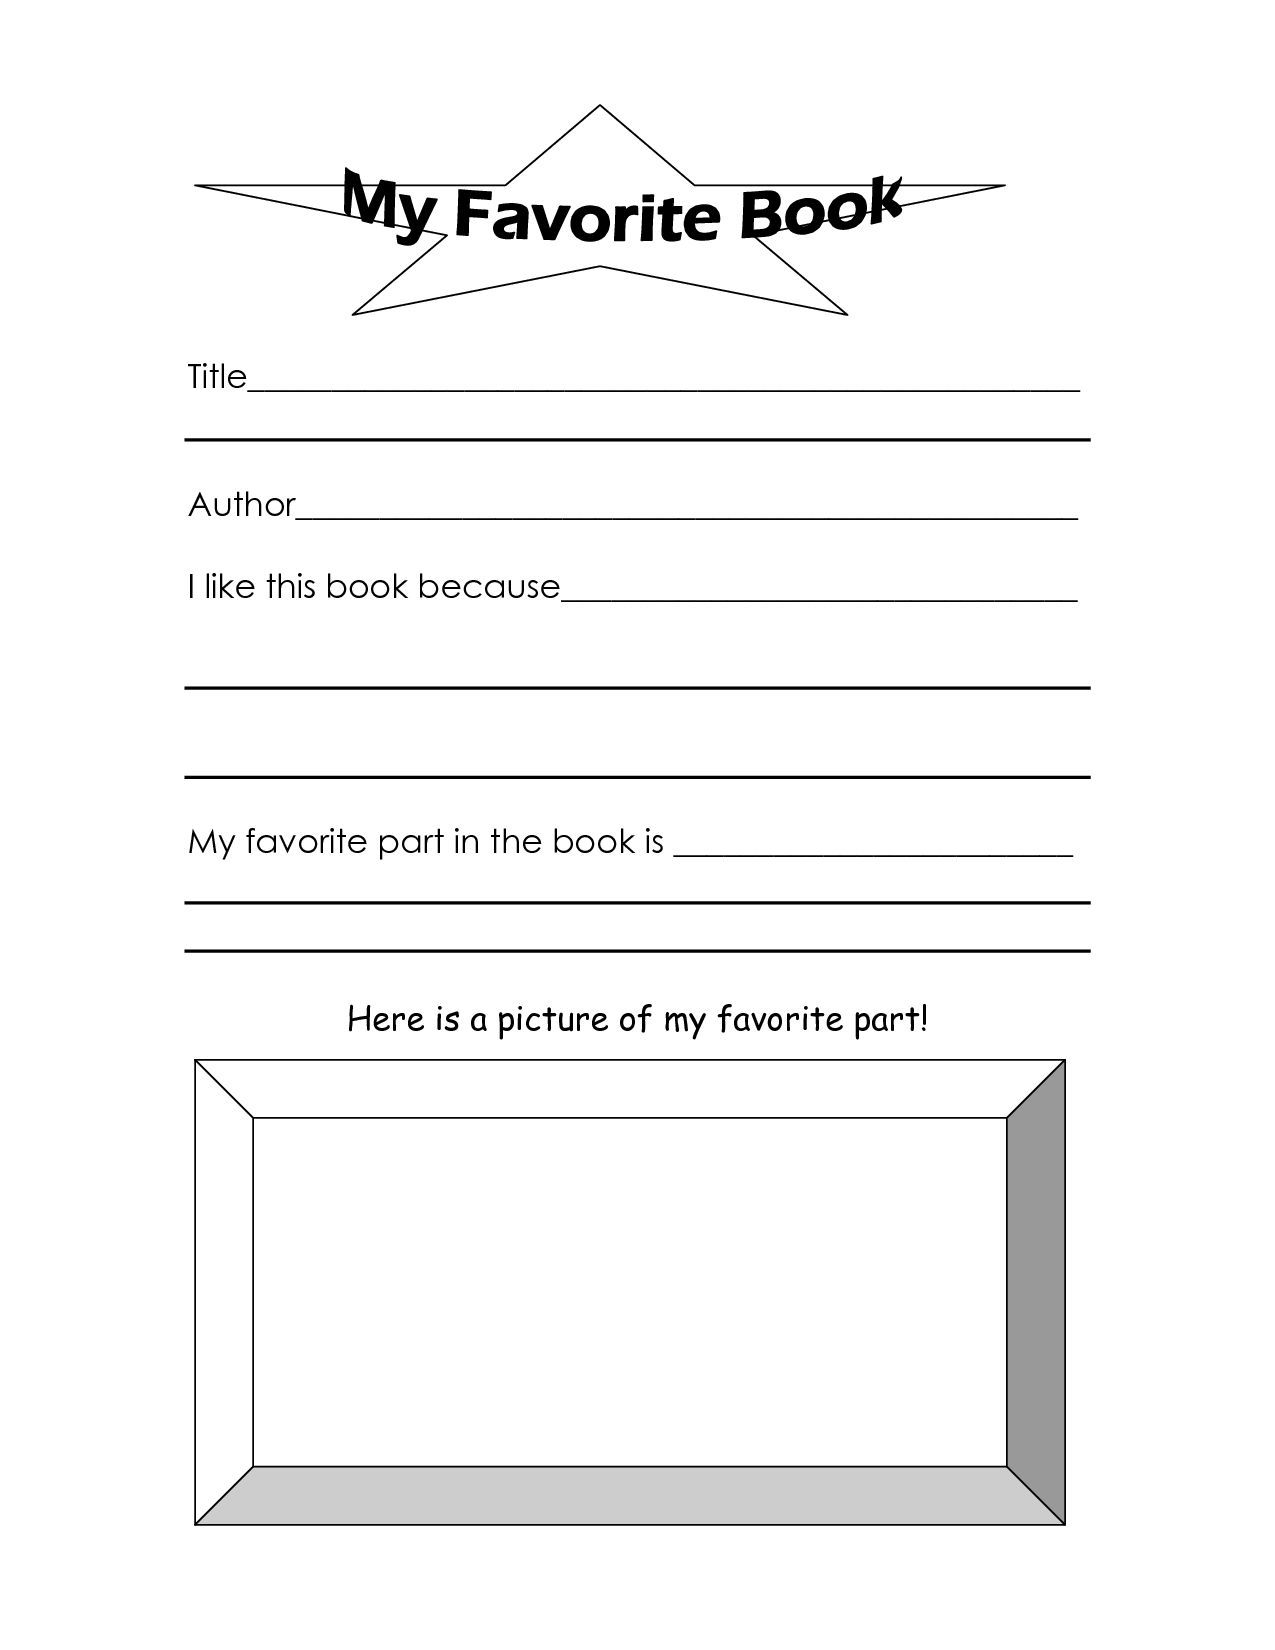 17 Best Images of My Favorite Memory Worksheet - My Memory Book ...